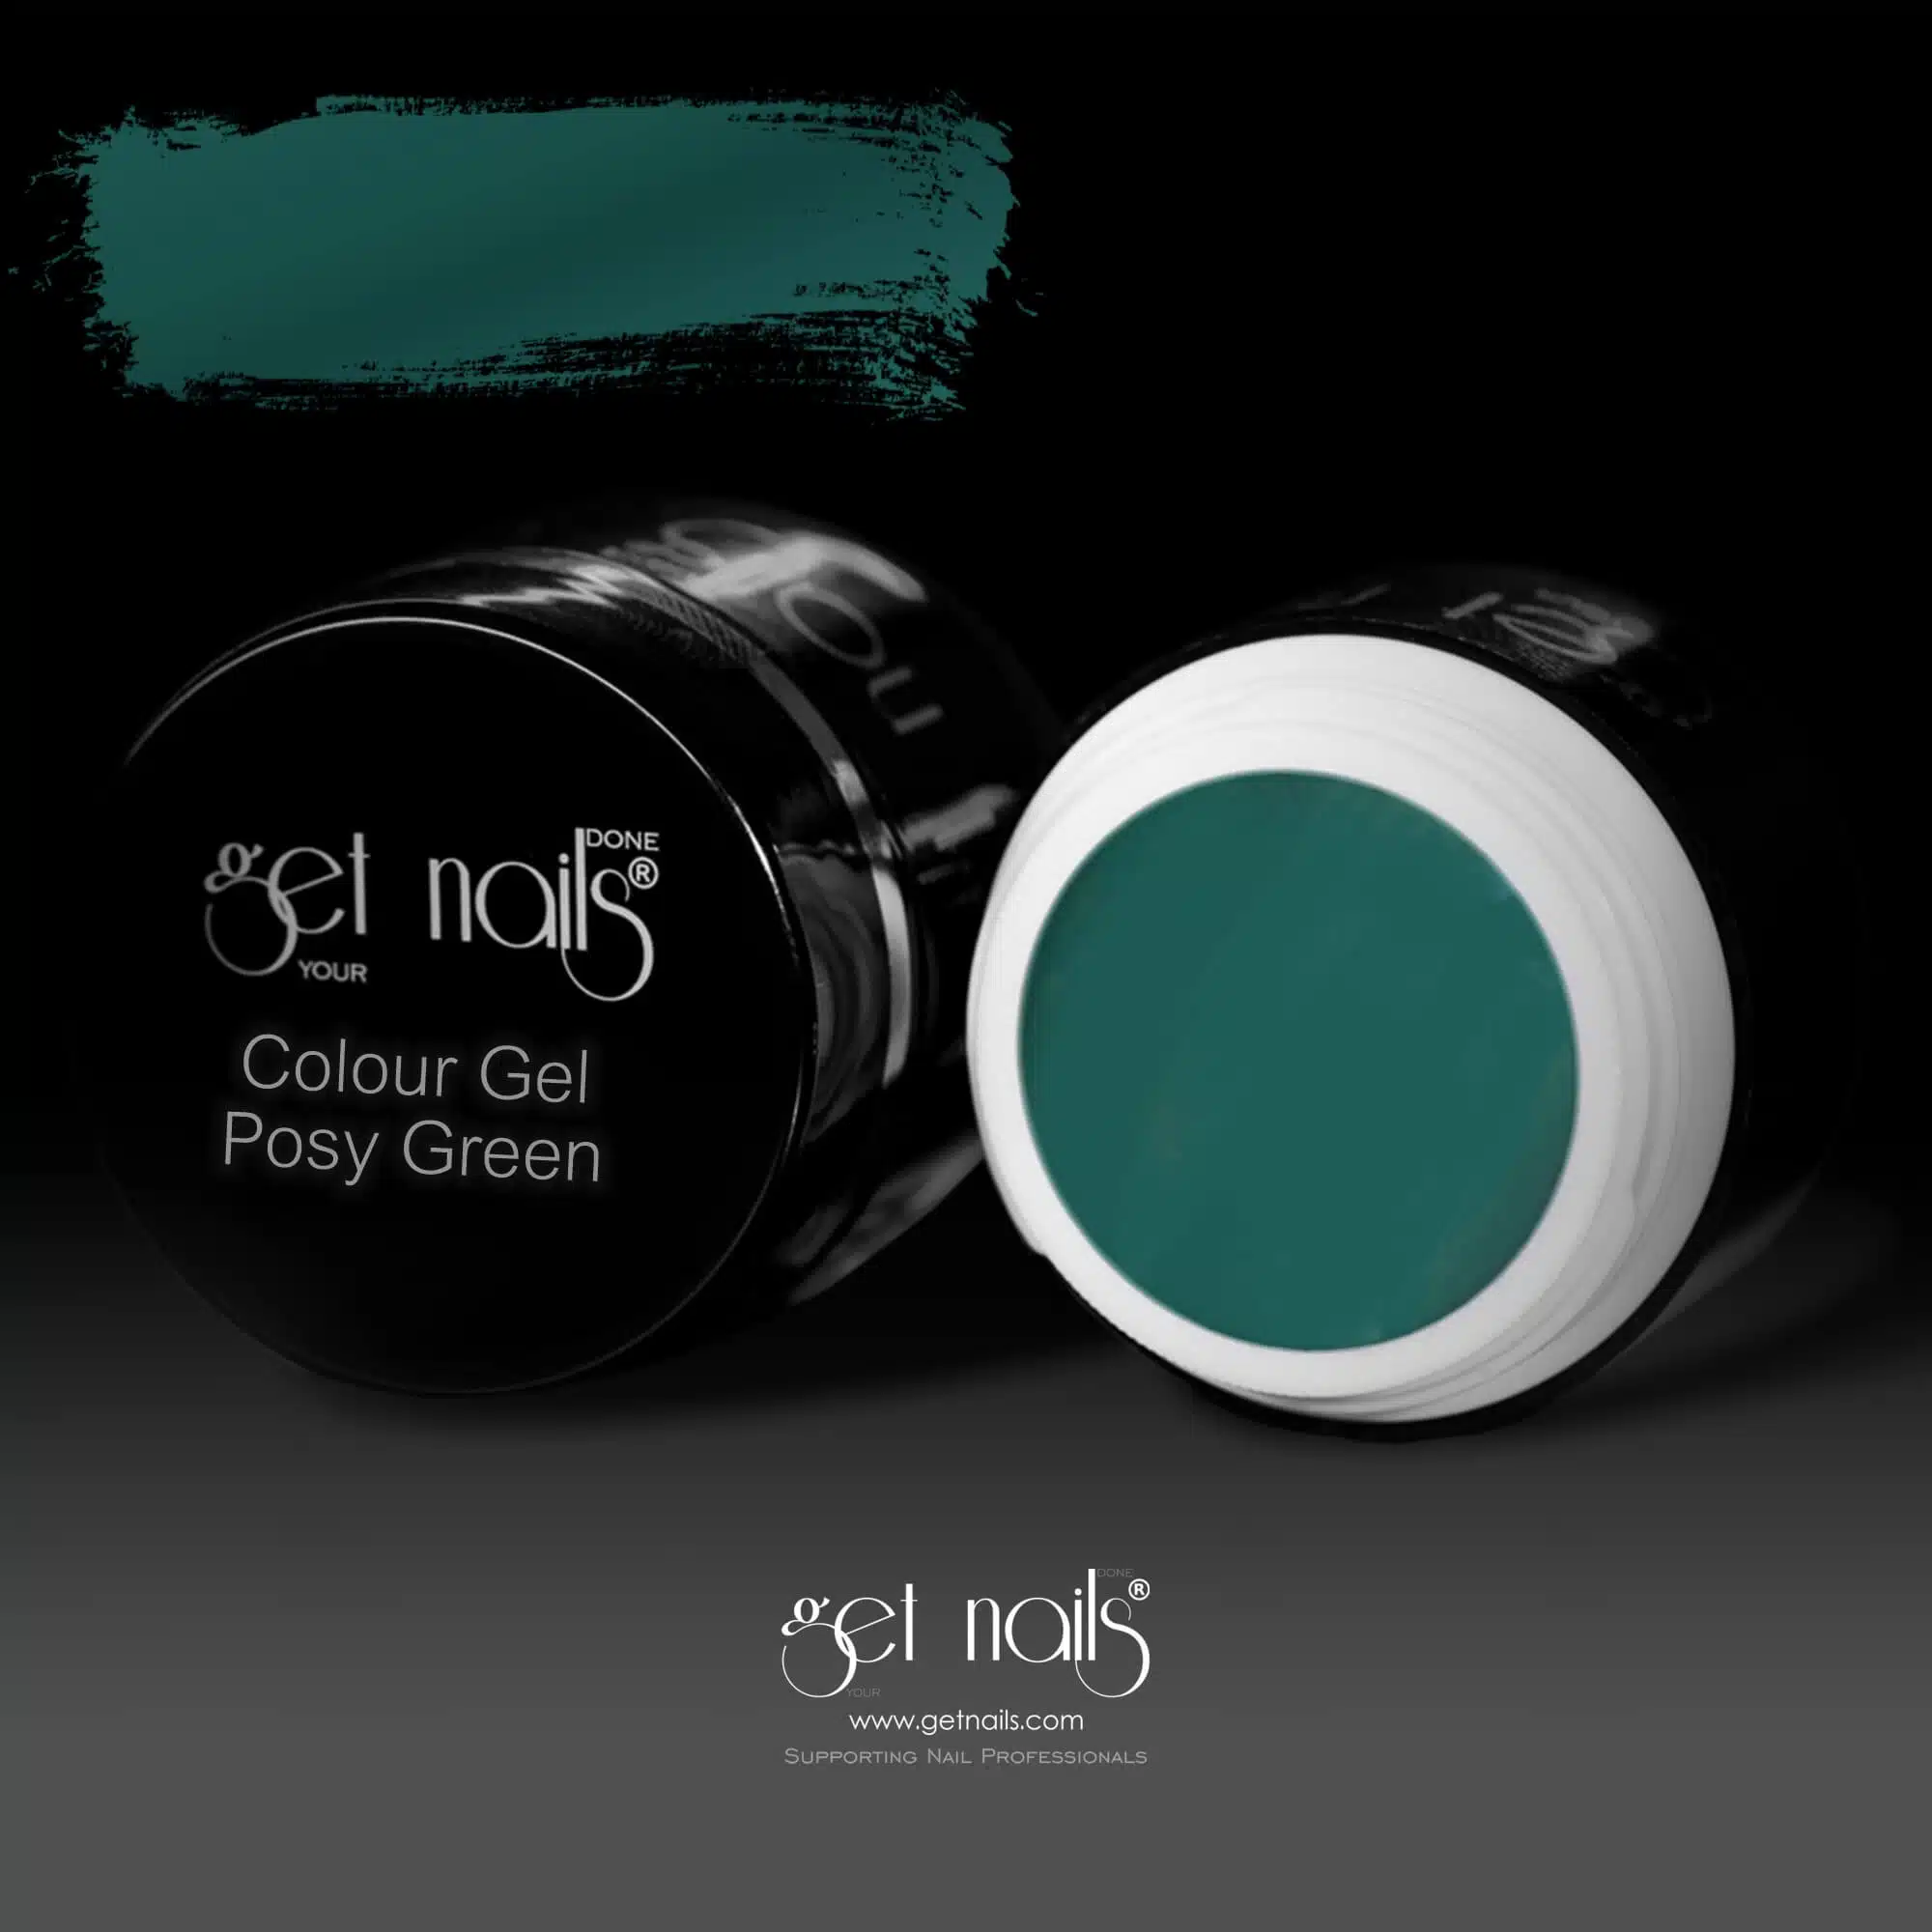 Get Nails Austria - Color Gel Posy Green 5g